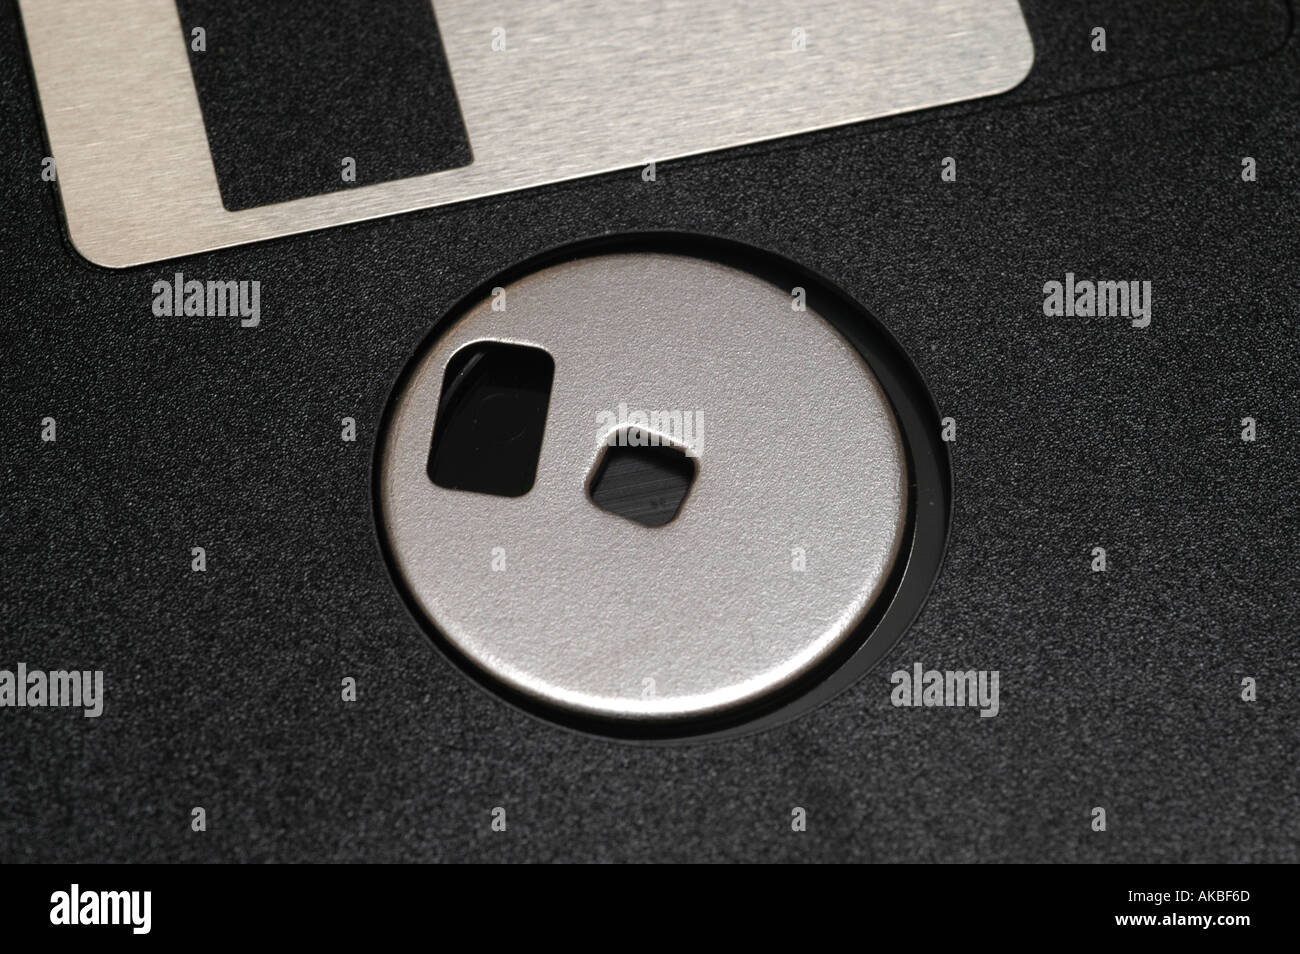 floppy disk Stock Photo